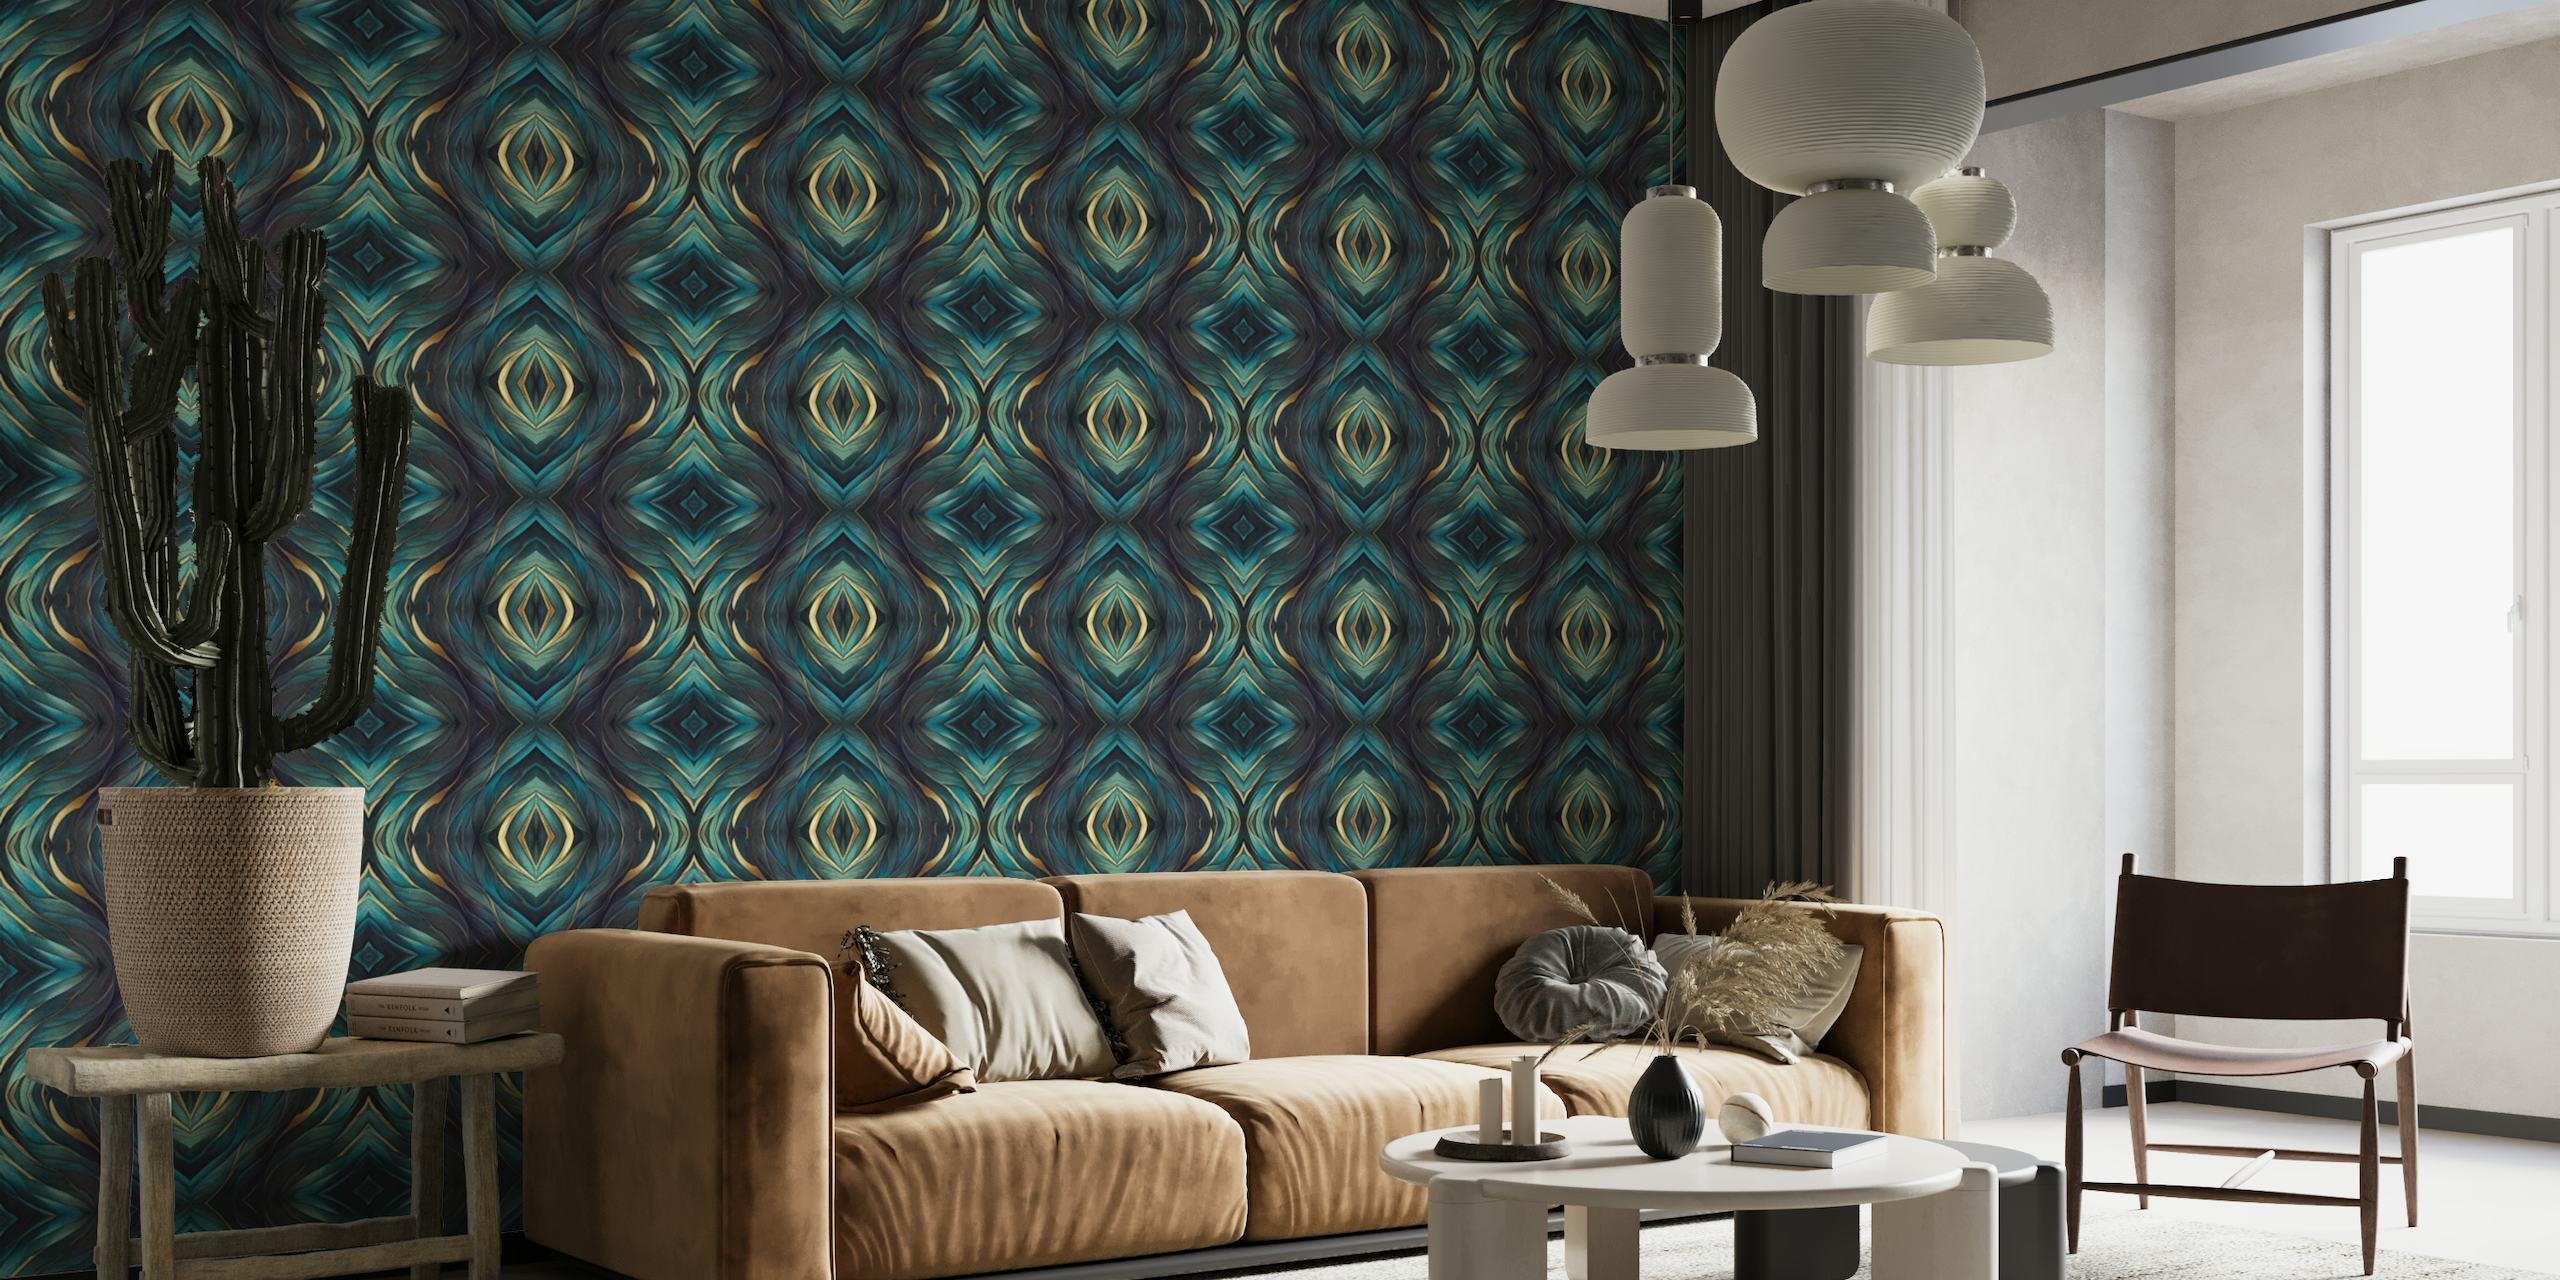 Artisanal Mediterranean Tile Design Teal Blue Gold ταπετσαρία